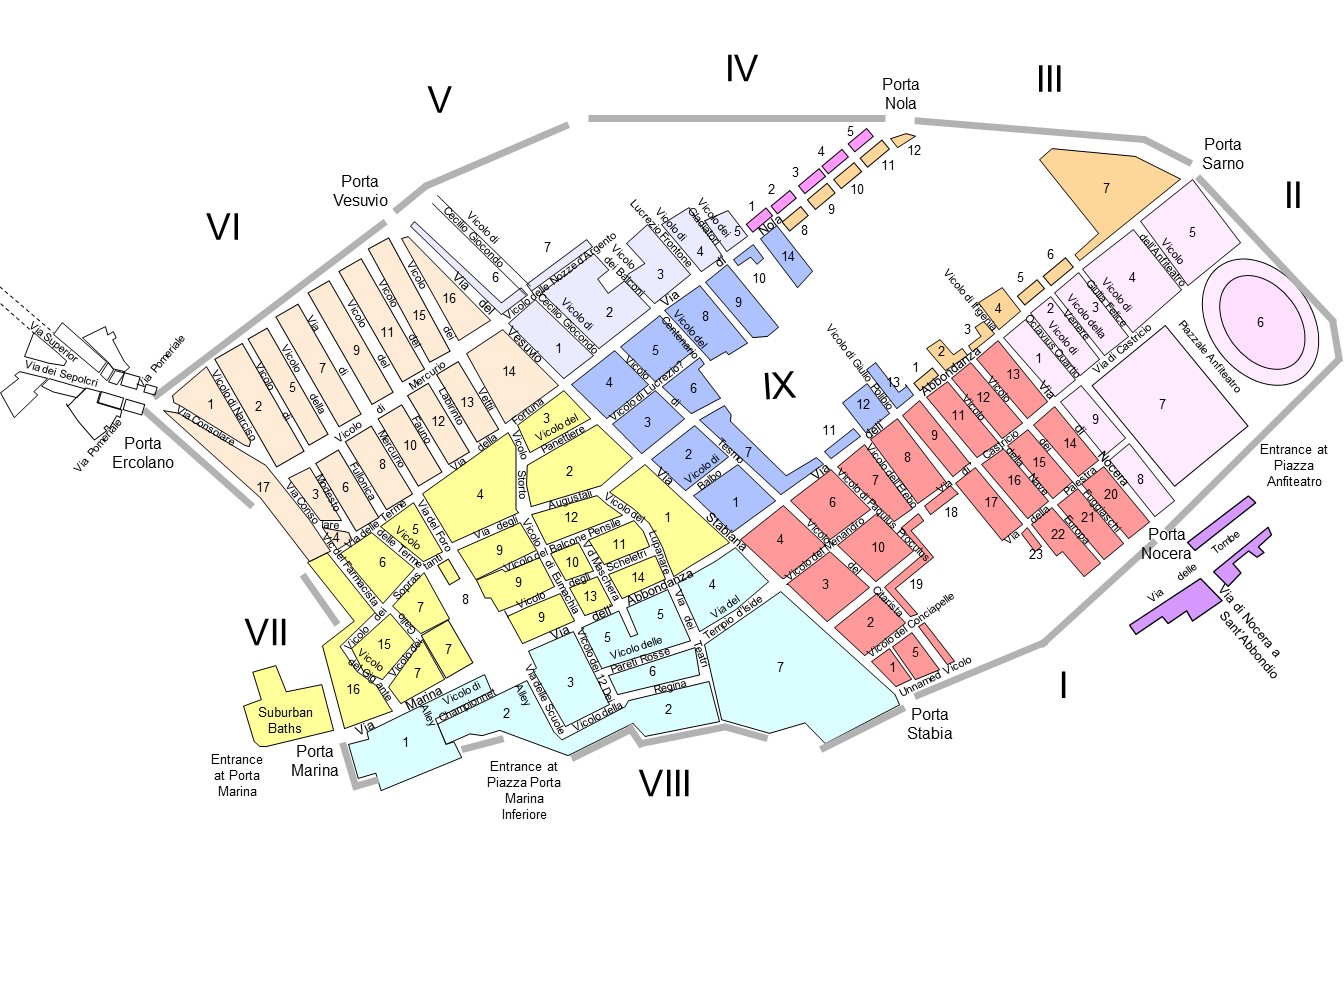 Pompeii Street View plan and index